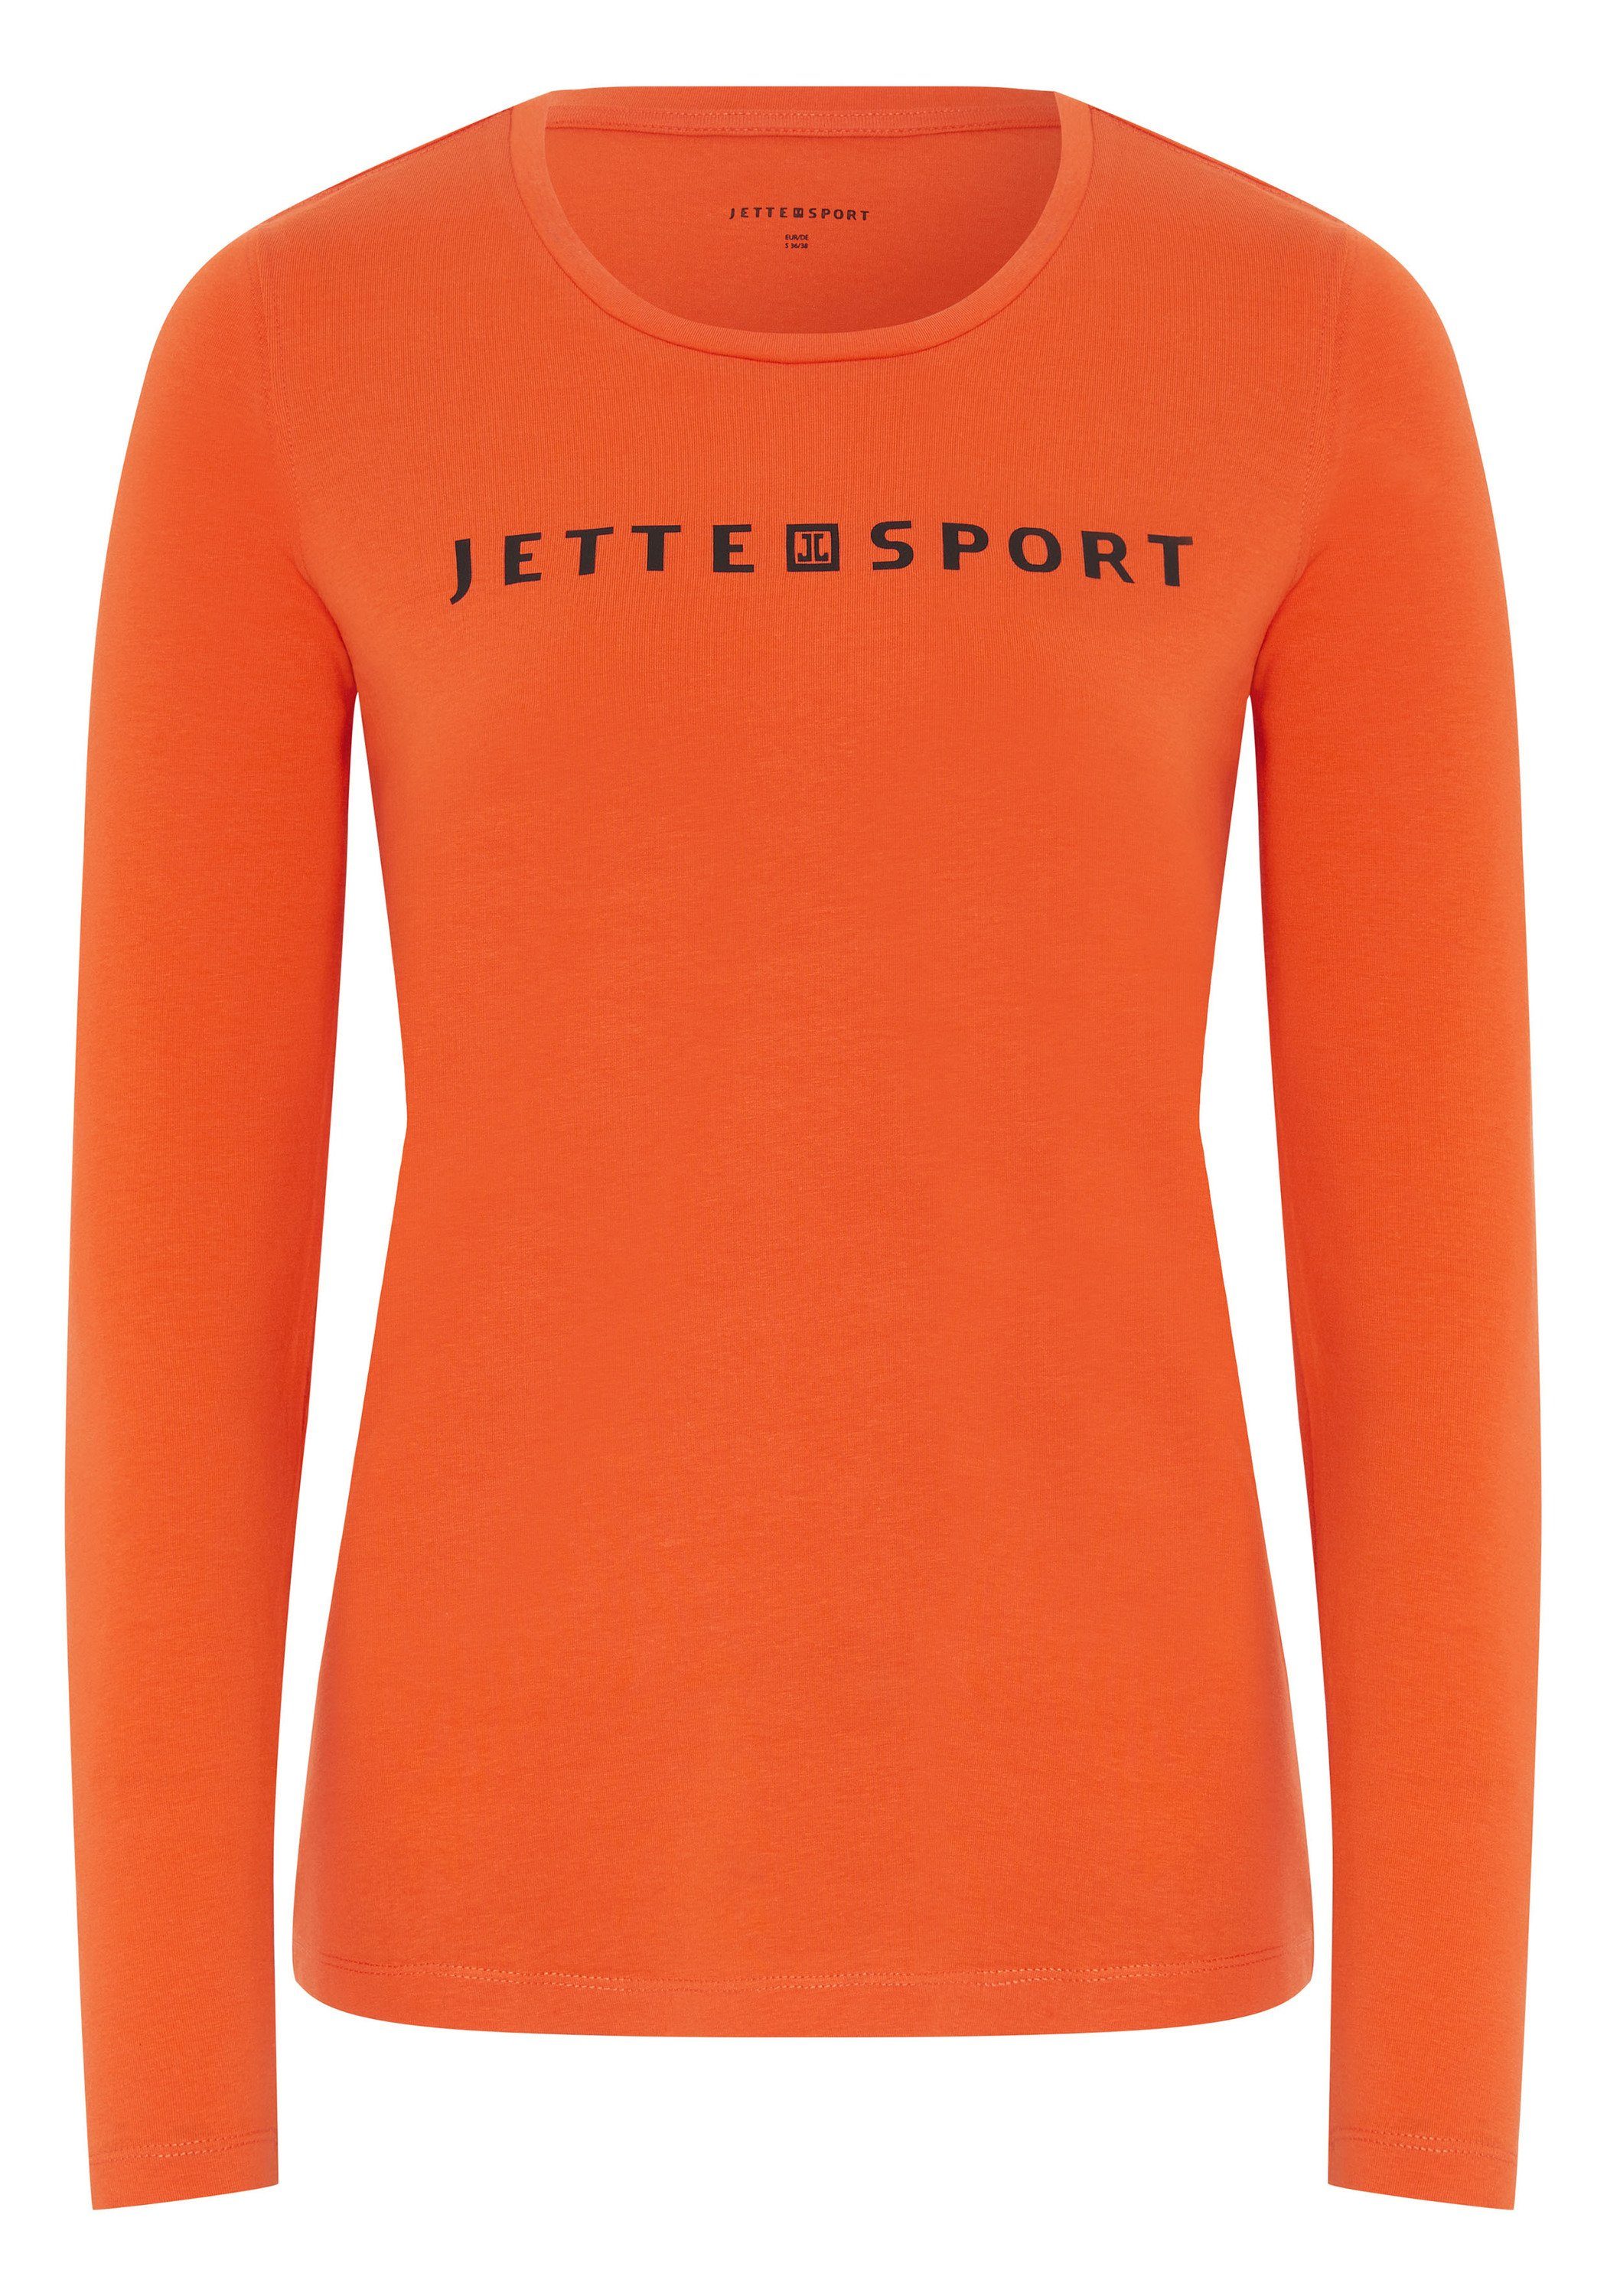 JETTE SPORT Langarmshirt mit Jette Sport Label-Druck 17-1462 Flame